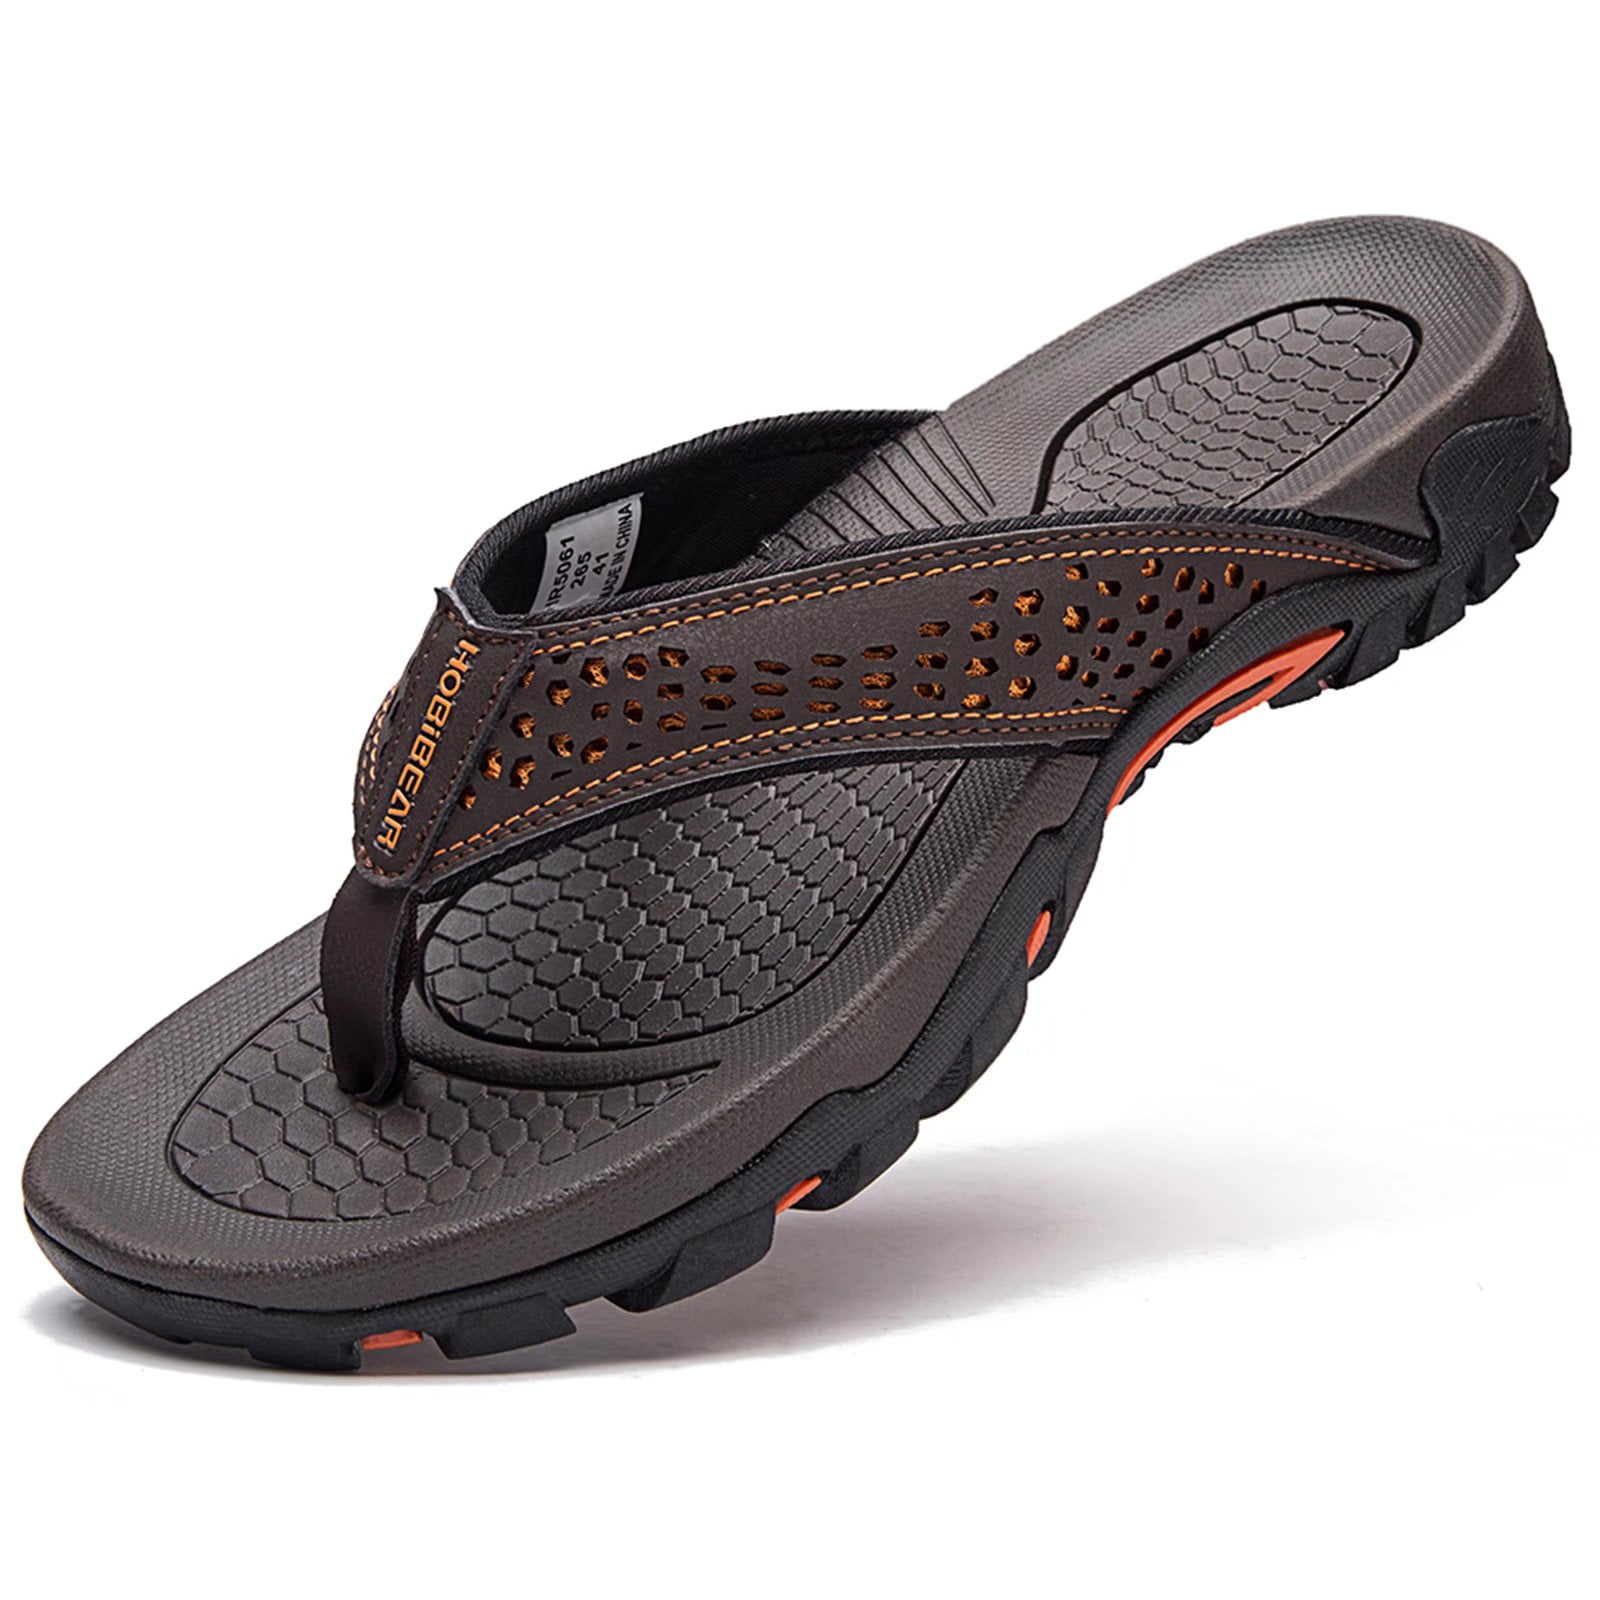  NeedBo Men's Flip Flops Thong Sandals Comfortable Lightweight  Beach Sandal (6 M US, Brown)